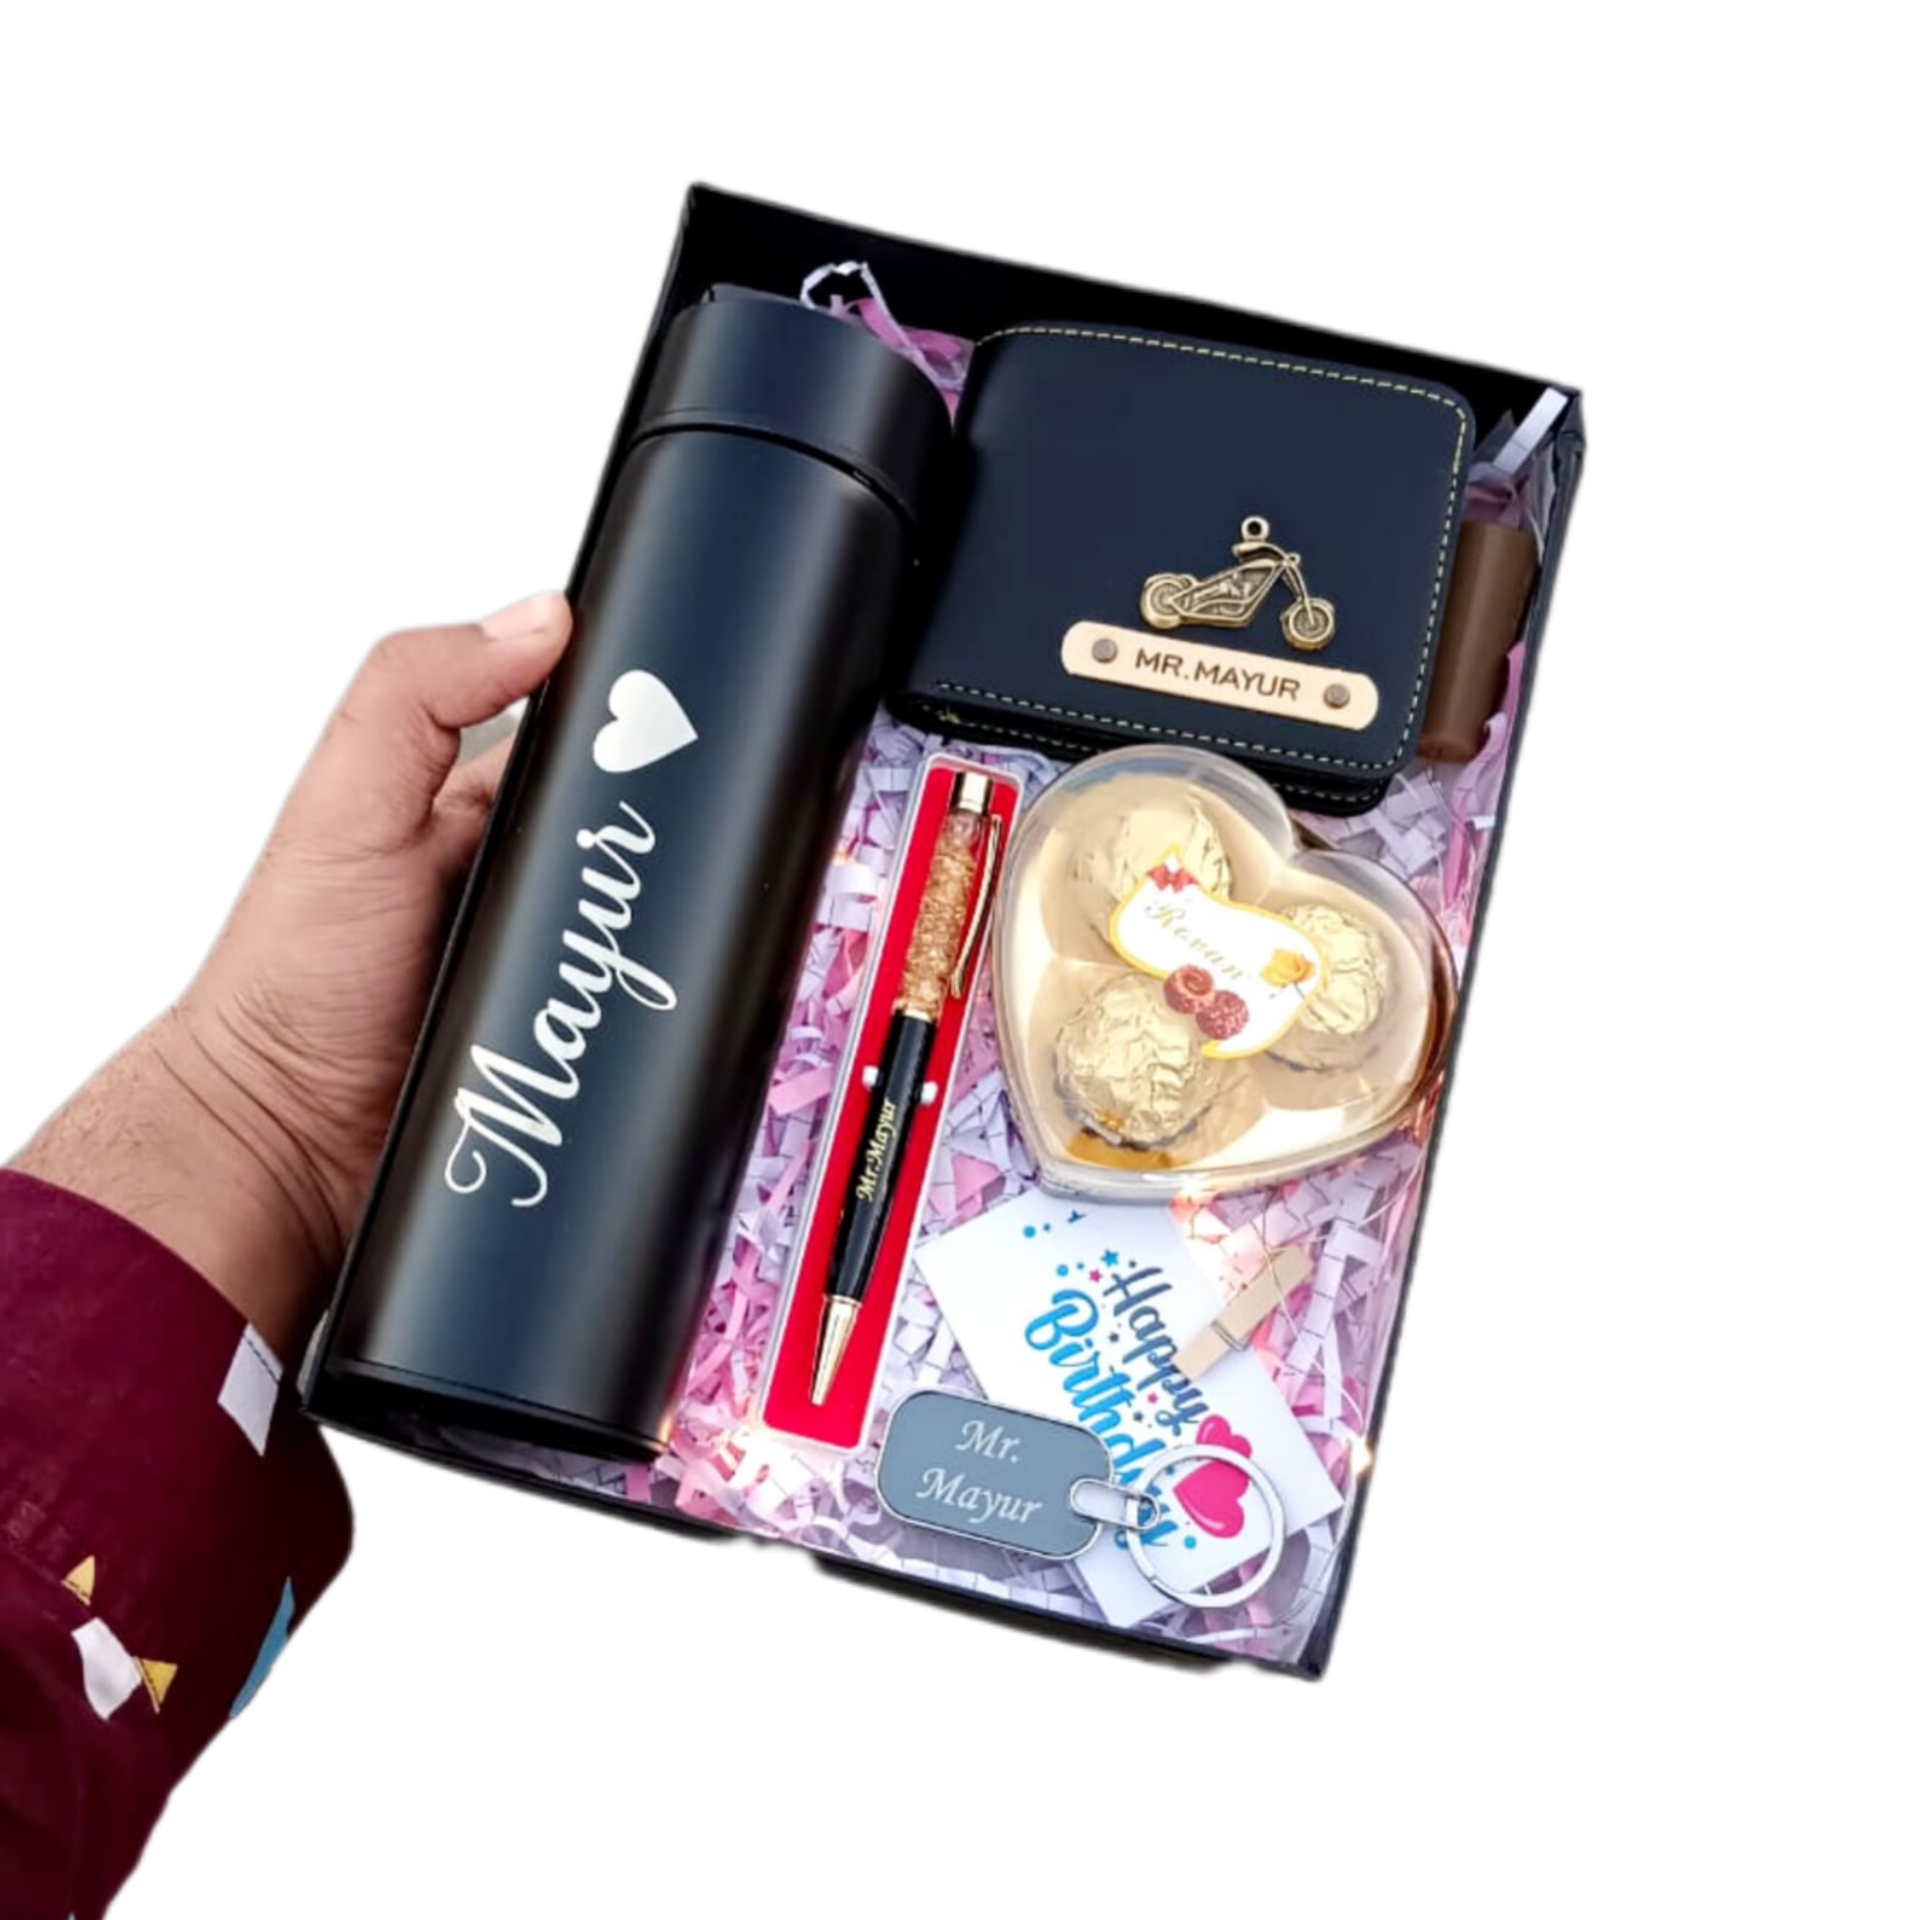 New Year's creative Ferrero candy chocolate gift box for children, boyfriend,  girlfriend, friends, elders' birthday gifts